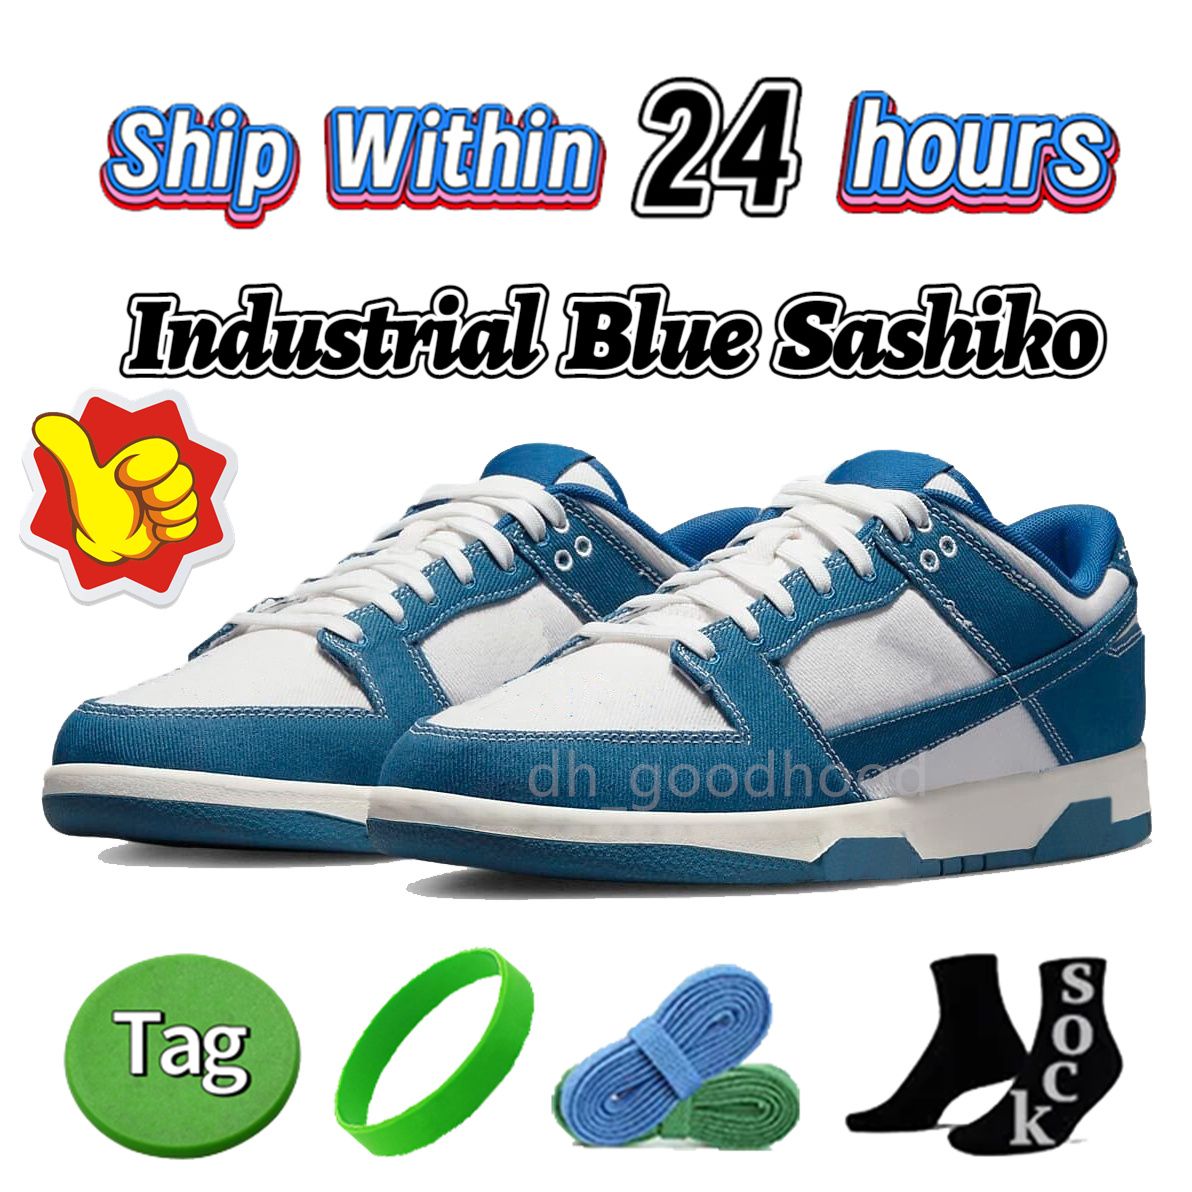 30 Industrieel Blauwe Sashiko